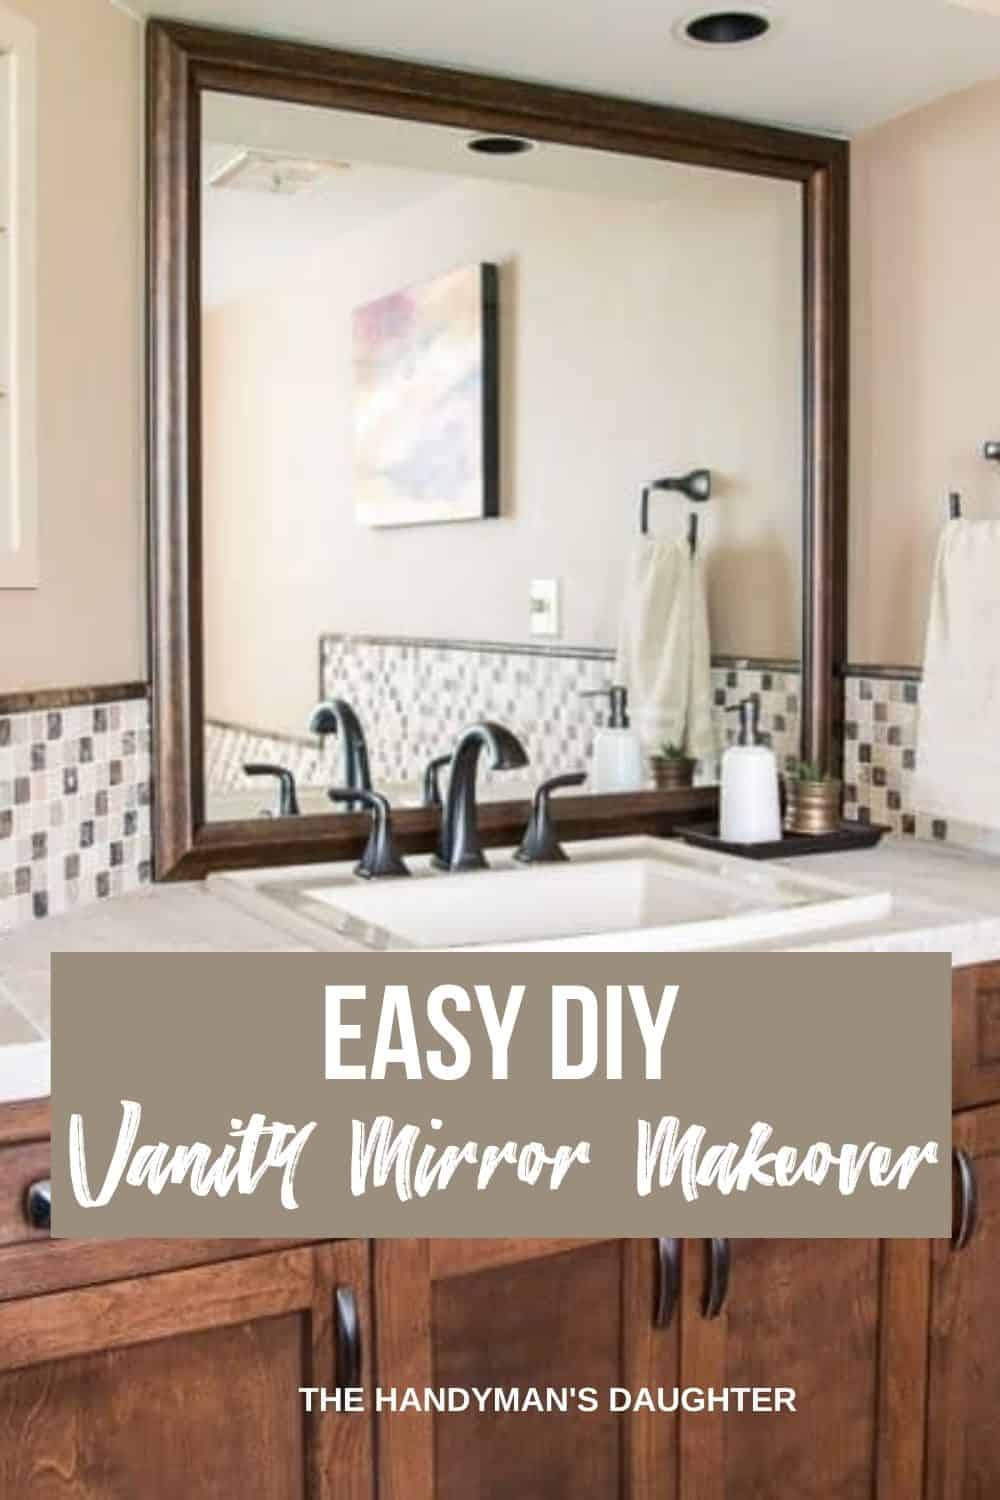 bathroom vanity and mirror with text overlay "Easy DIY Vanity Mirror Makeover"